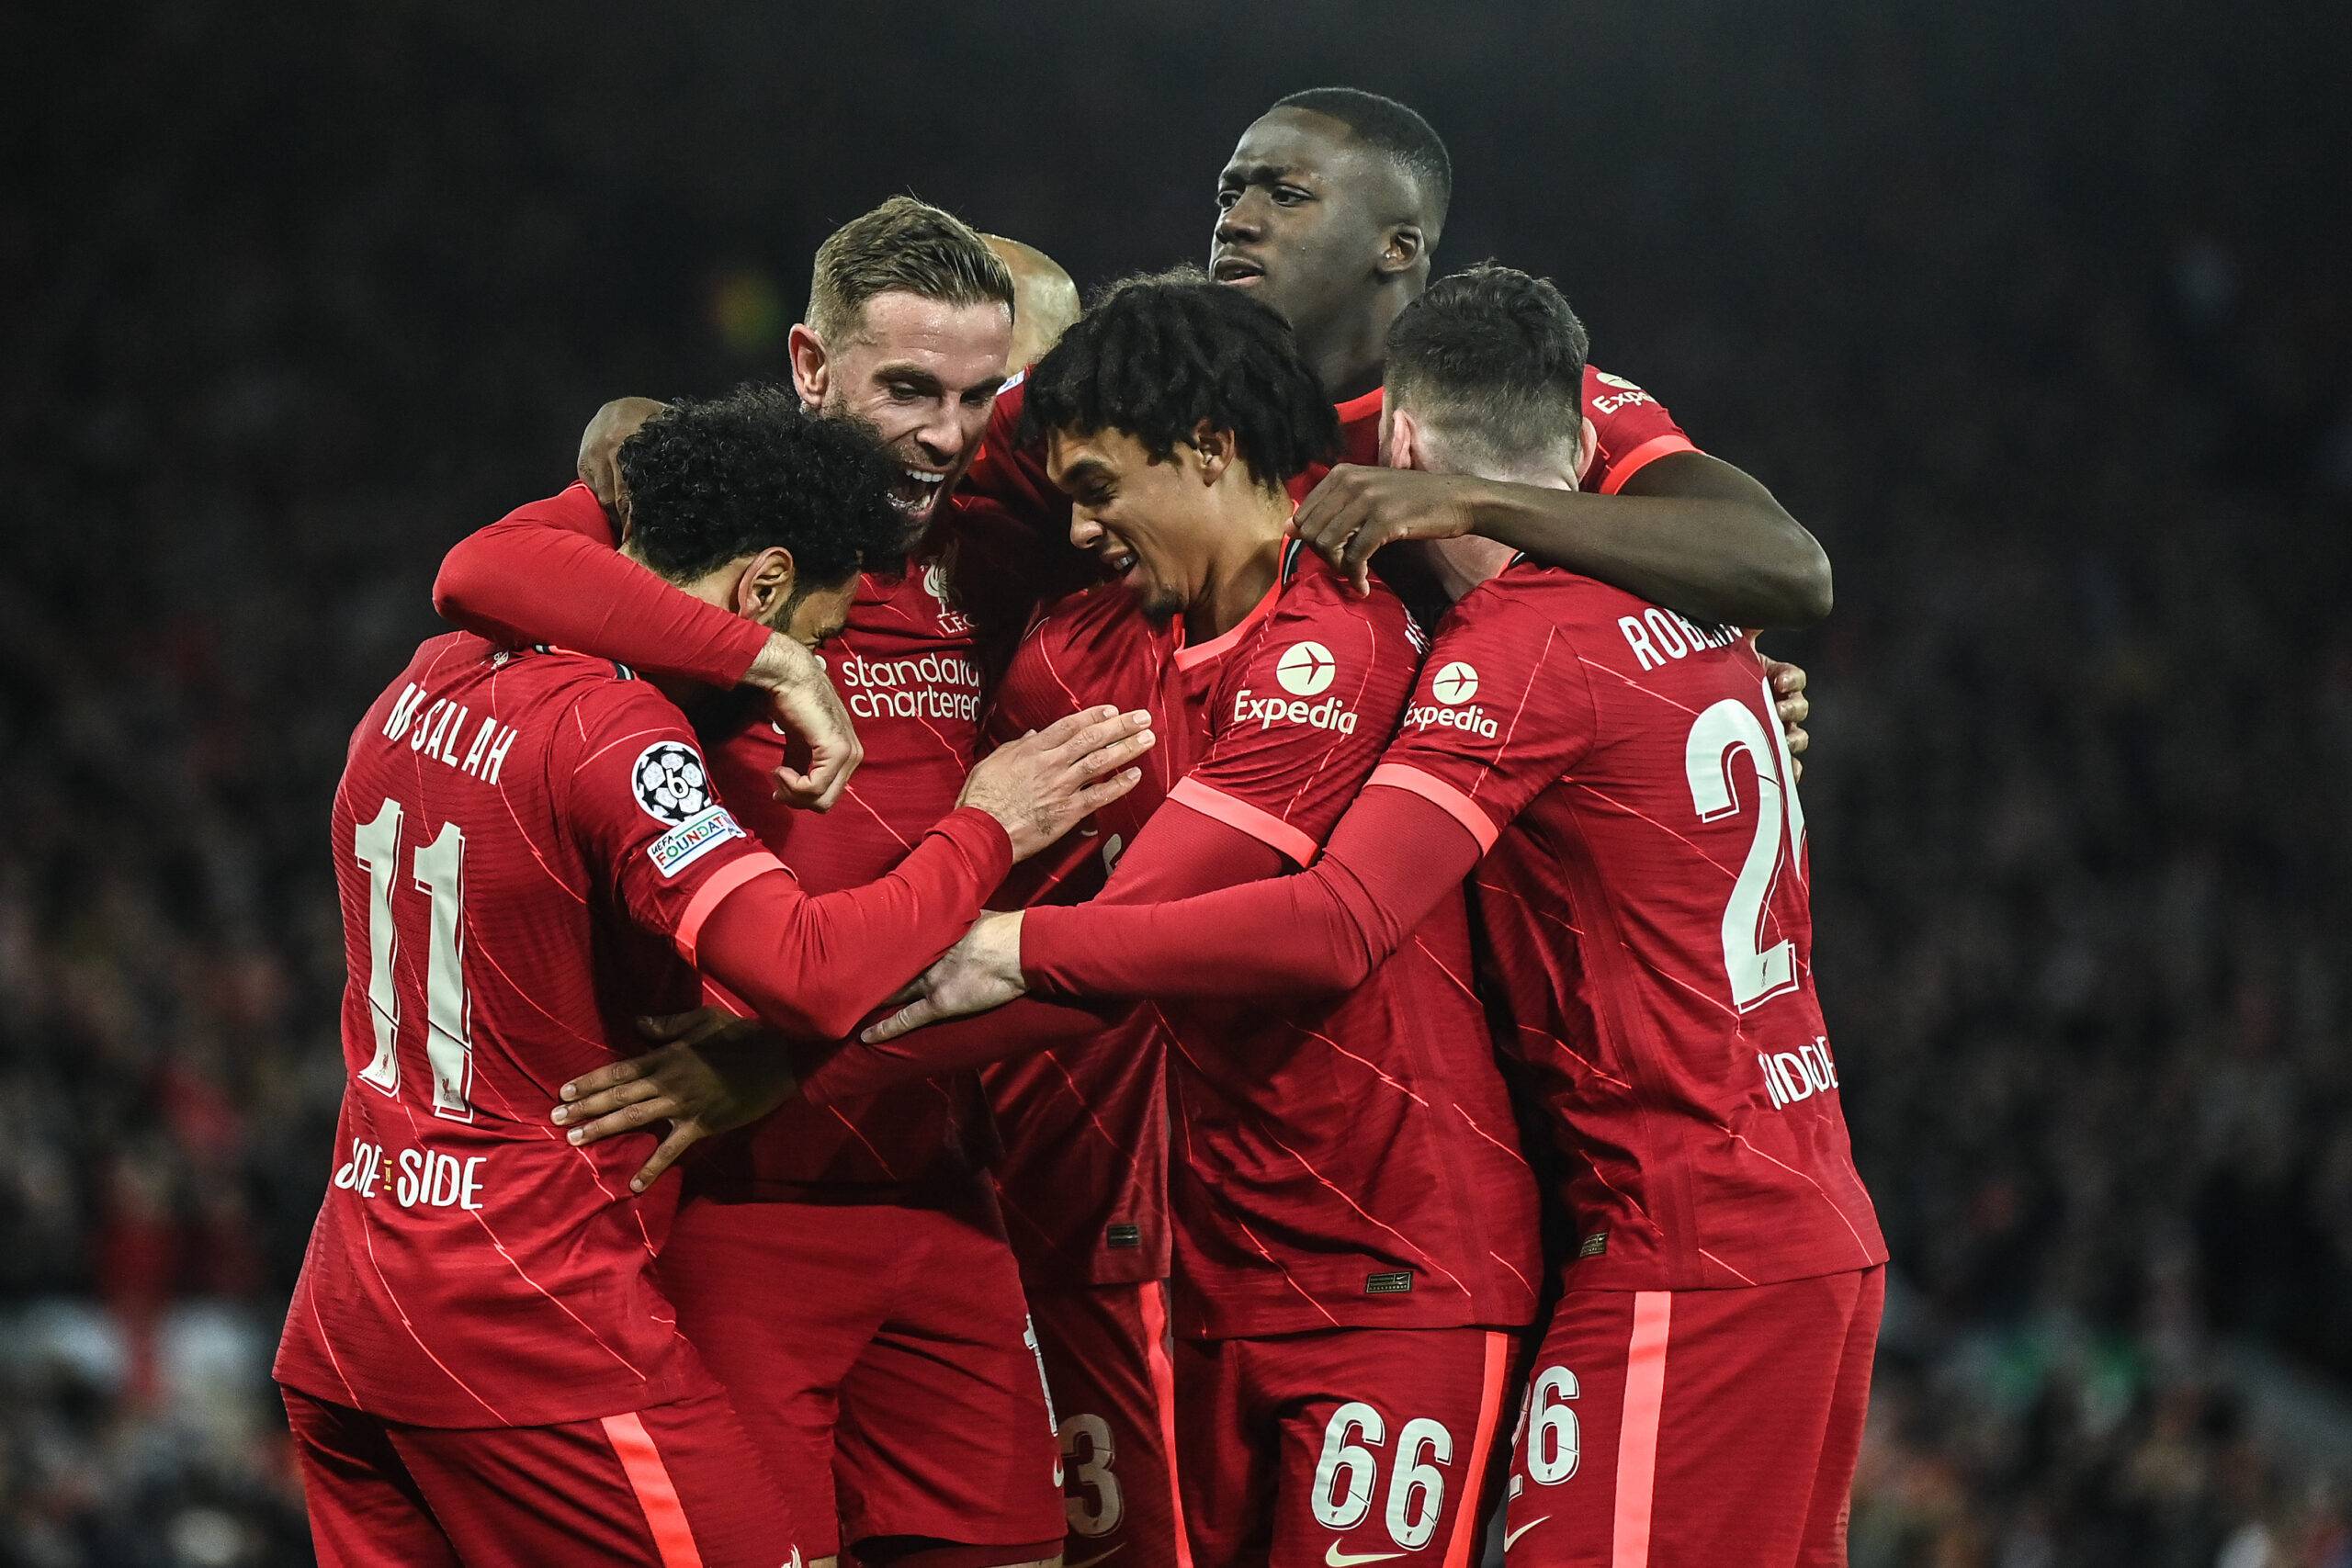 Liverpool team celebrates